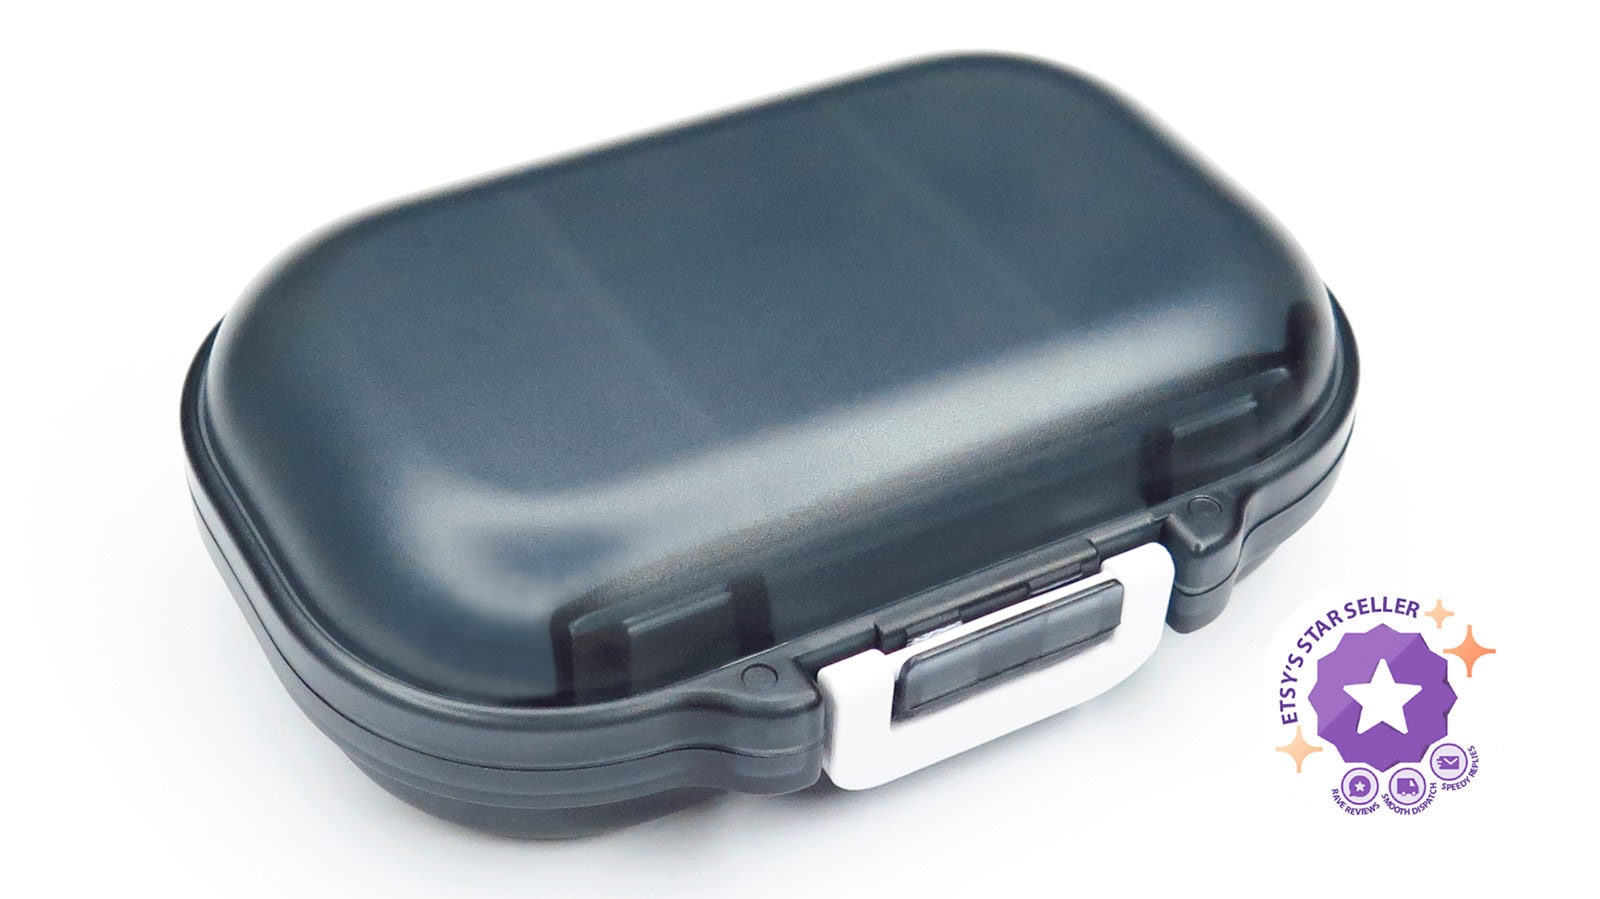 CASEMATIX 9.5 Waterproof Small Hard Case With Customizable Foam